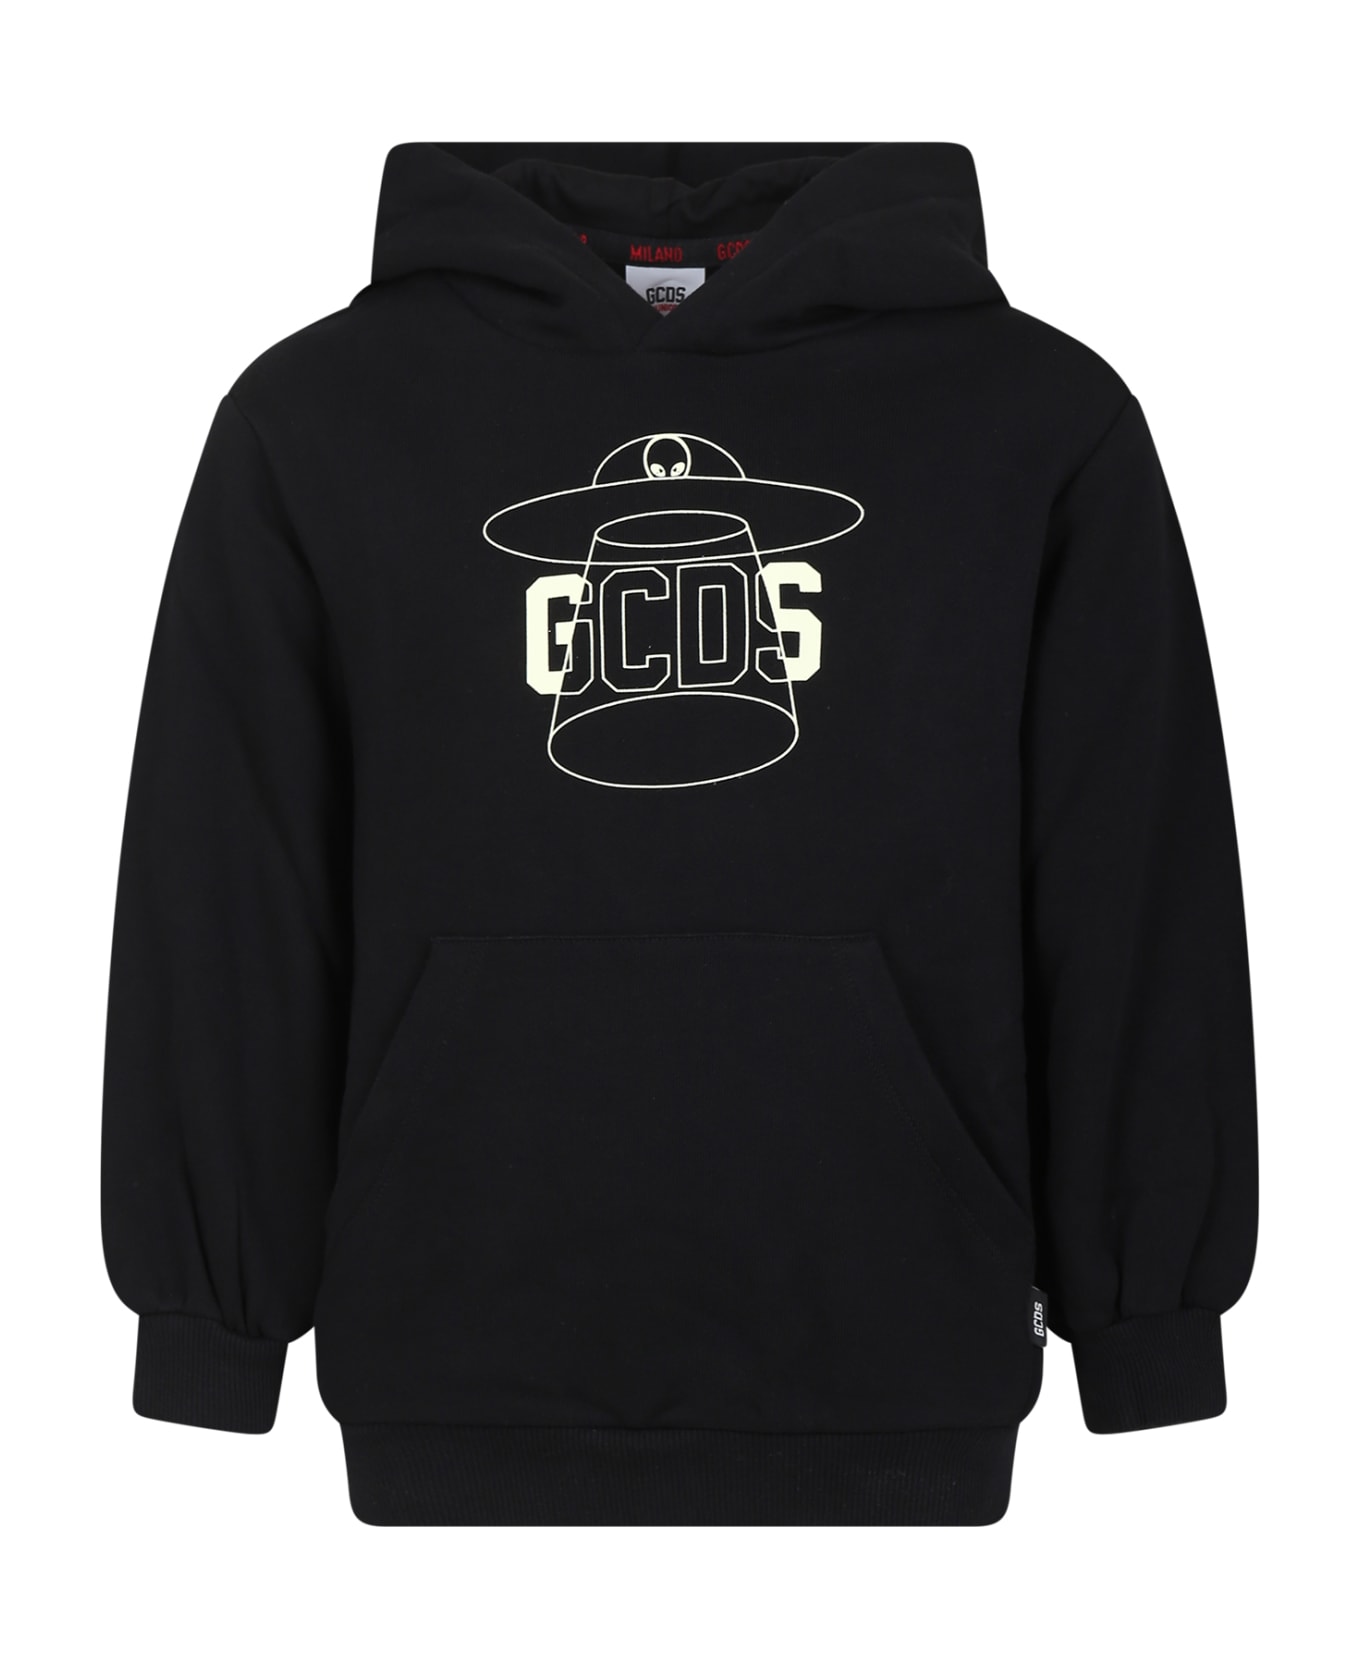 GCDS Mini Black Sweatshirt For Kids With Alien Print And Logo - Black